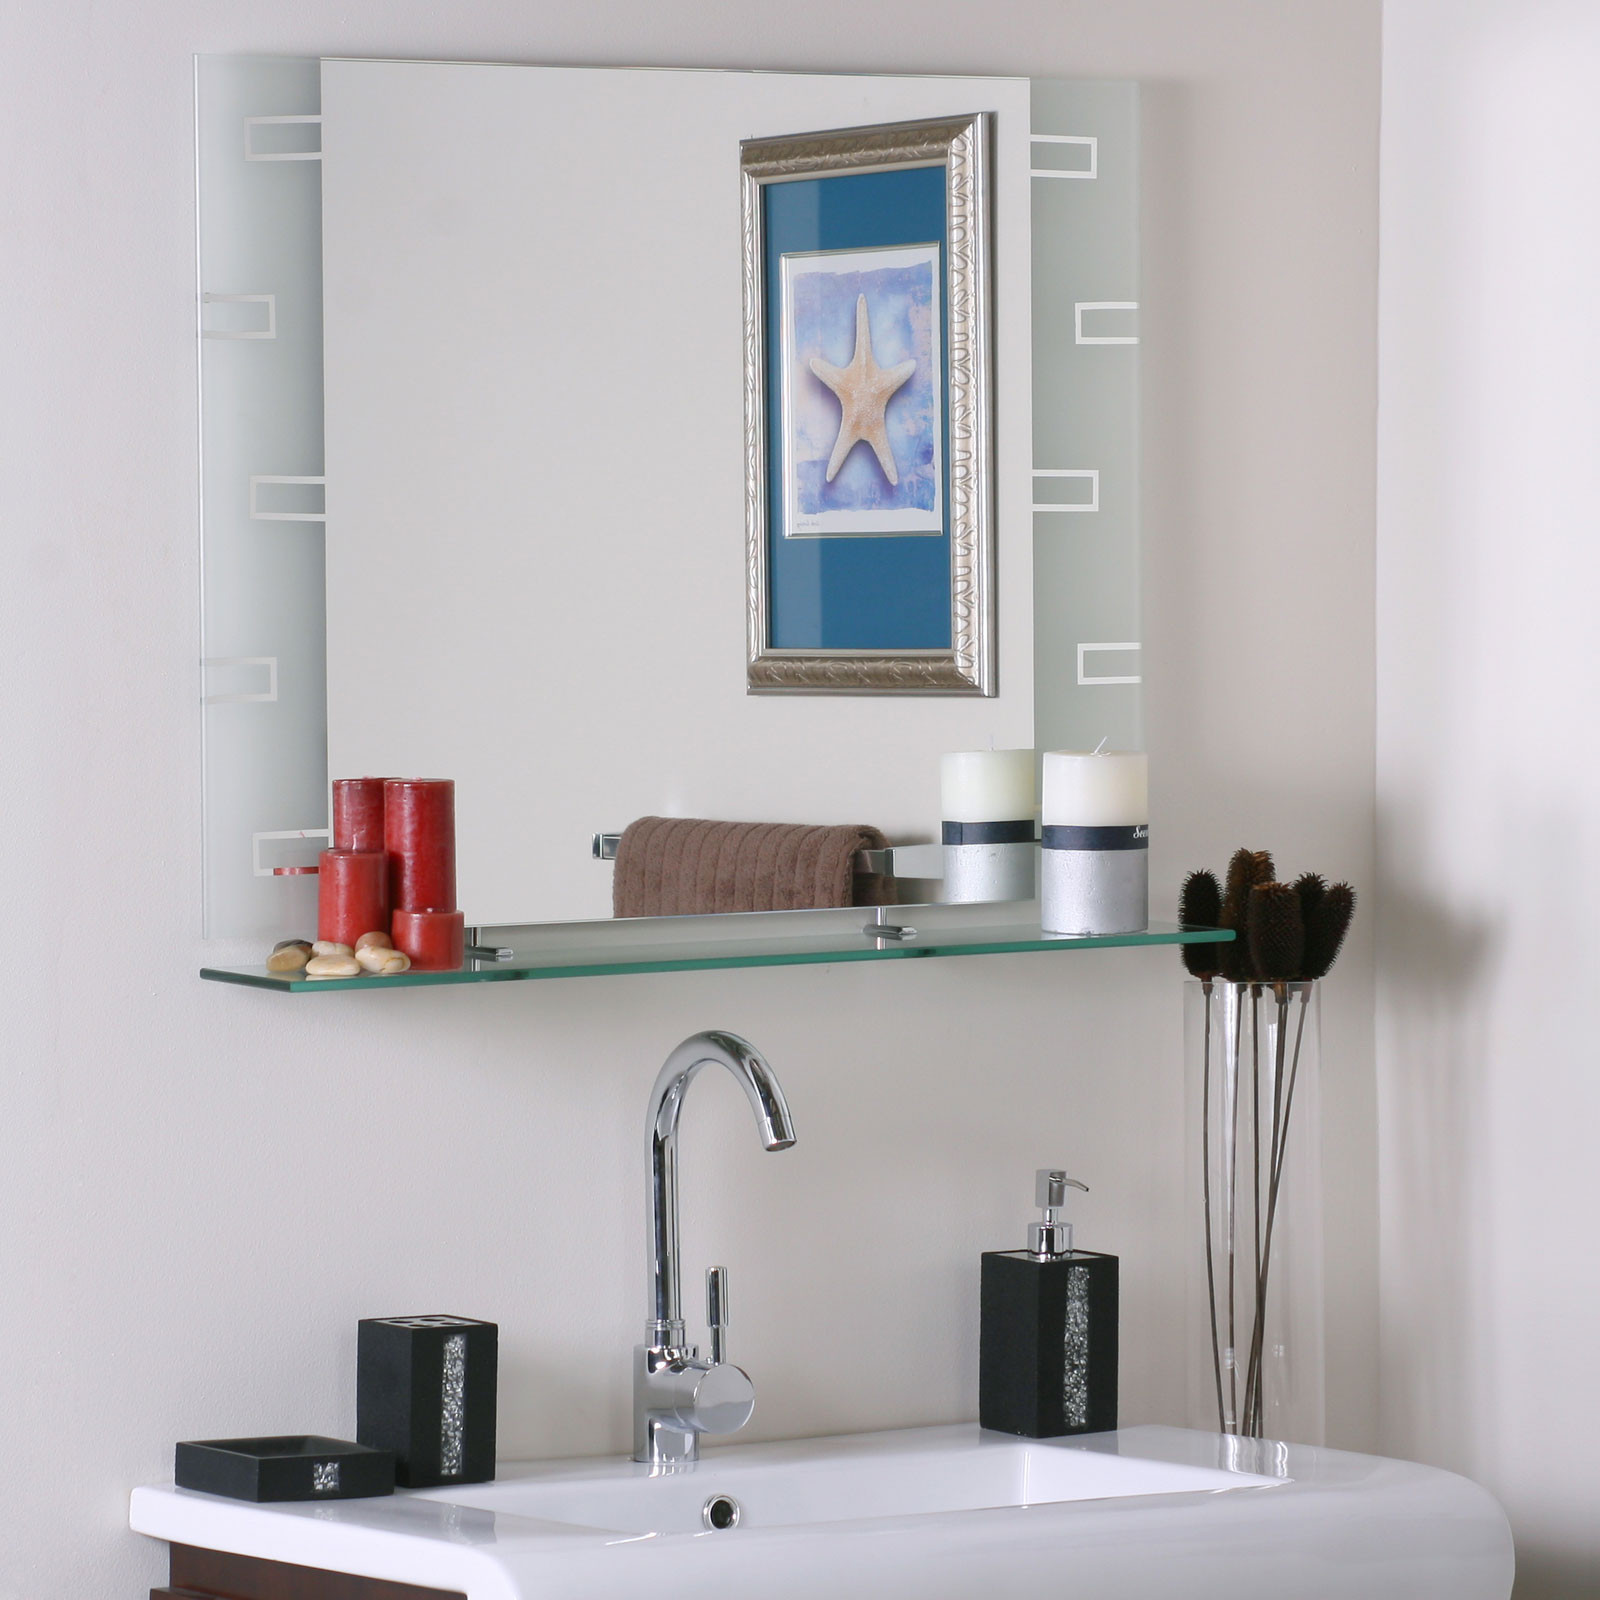 Modern Mirrors For Bathroom
 Frameless Contemporary Bathroom Mirror with Shelf in